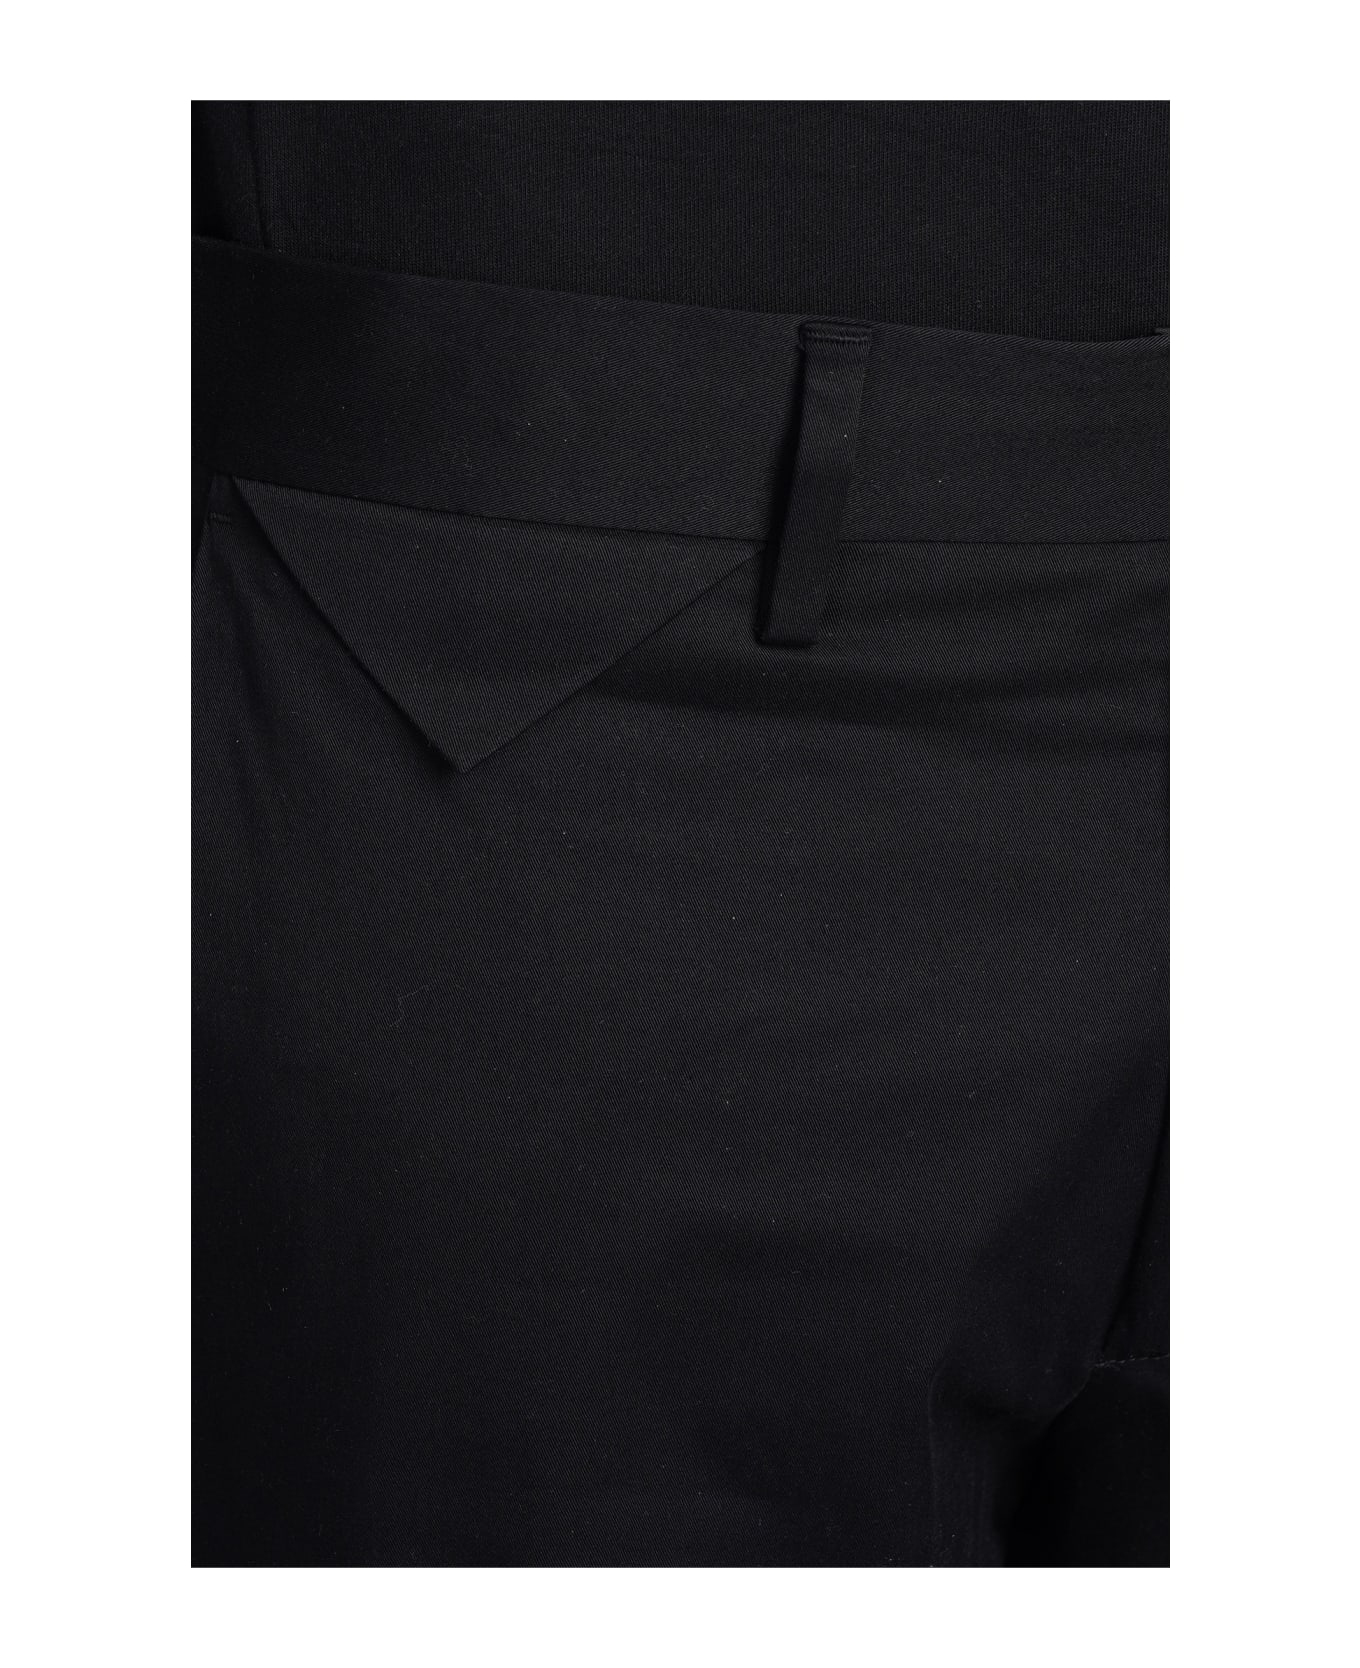 Low Brand Cooper T1.7 Pants In Black Cotton - black